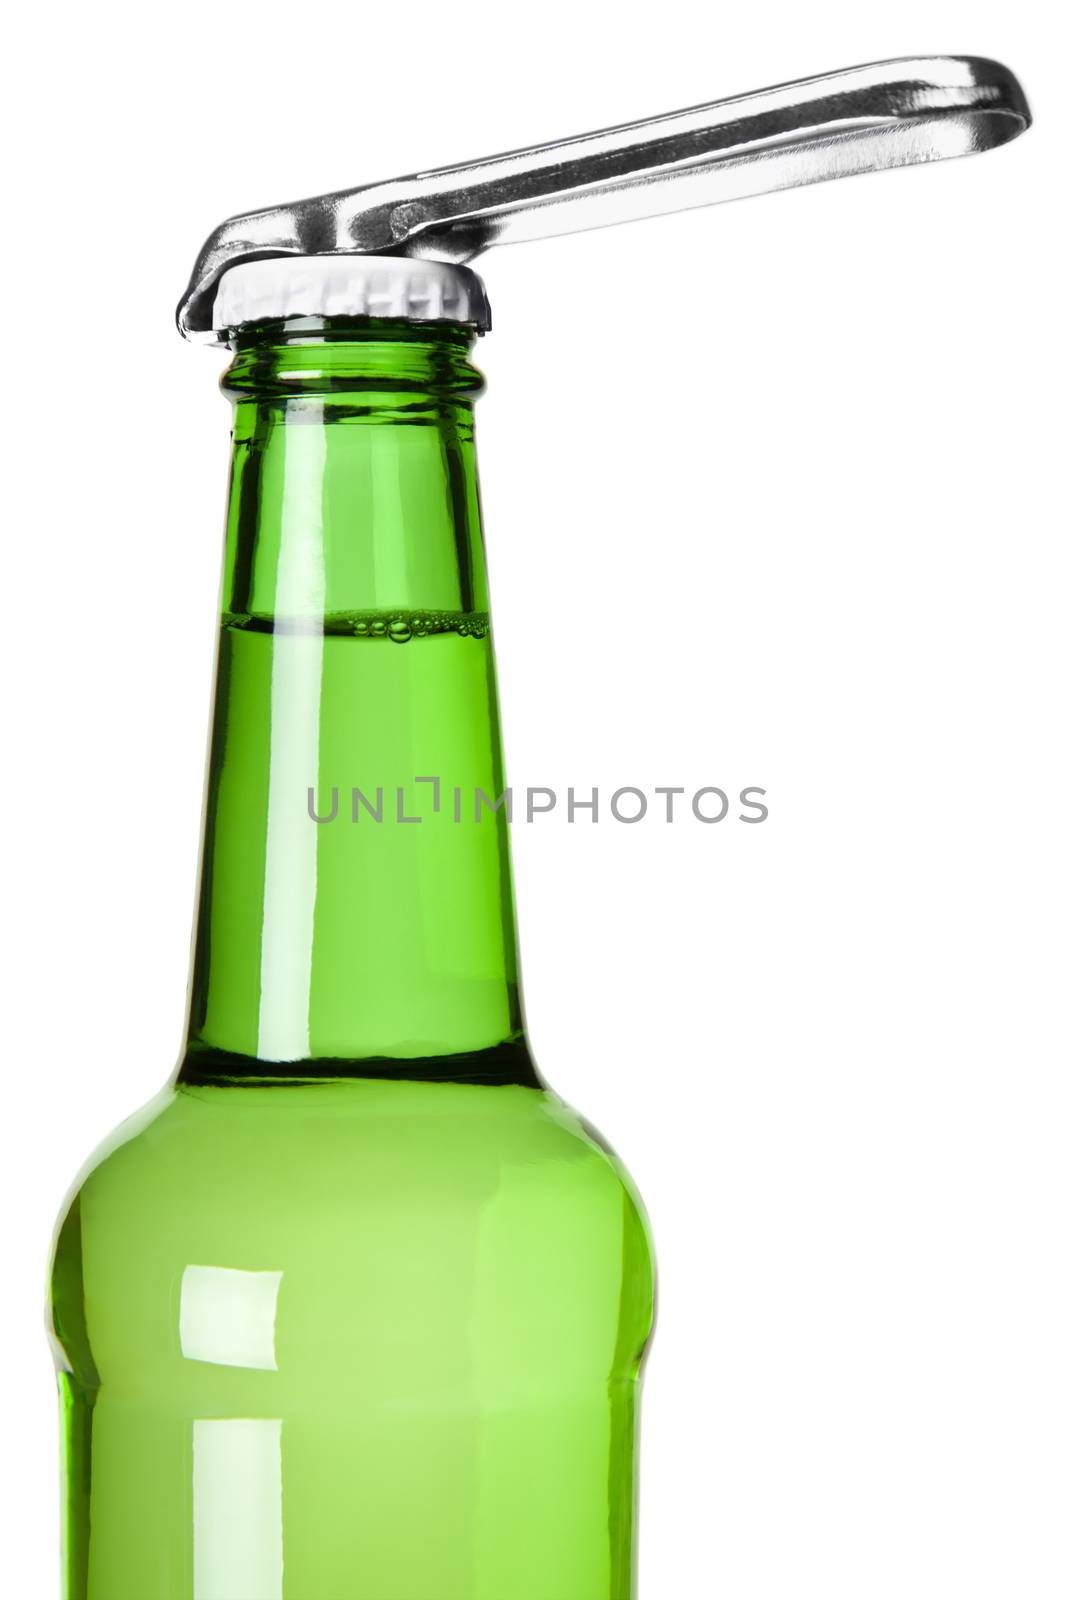 A bottle opener on top of a beer bottle.